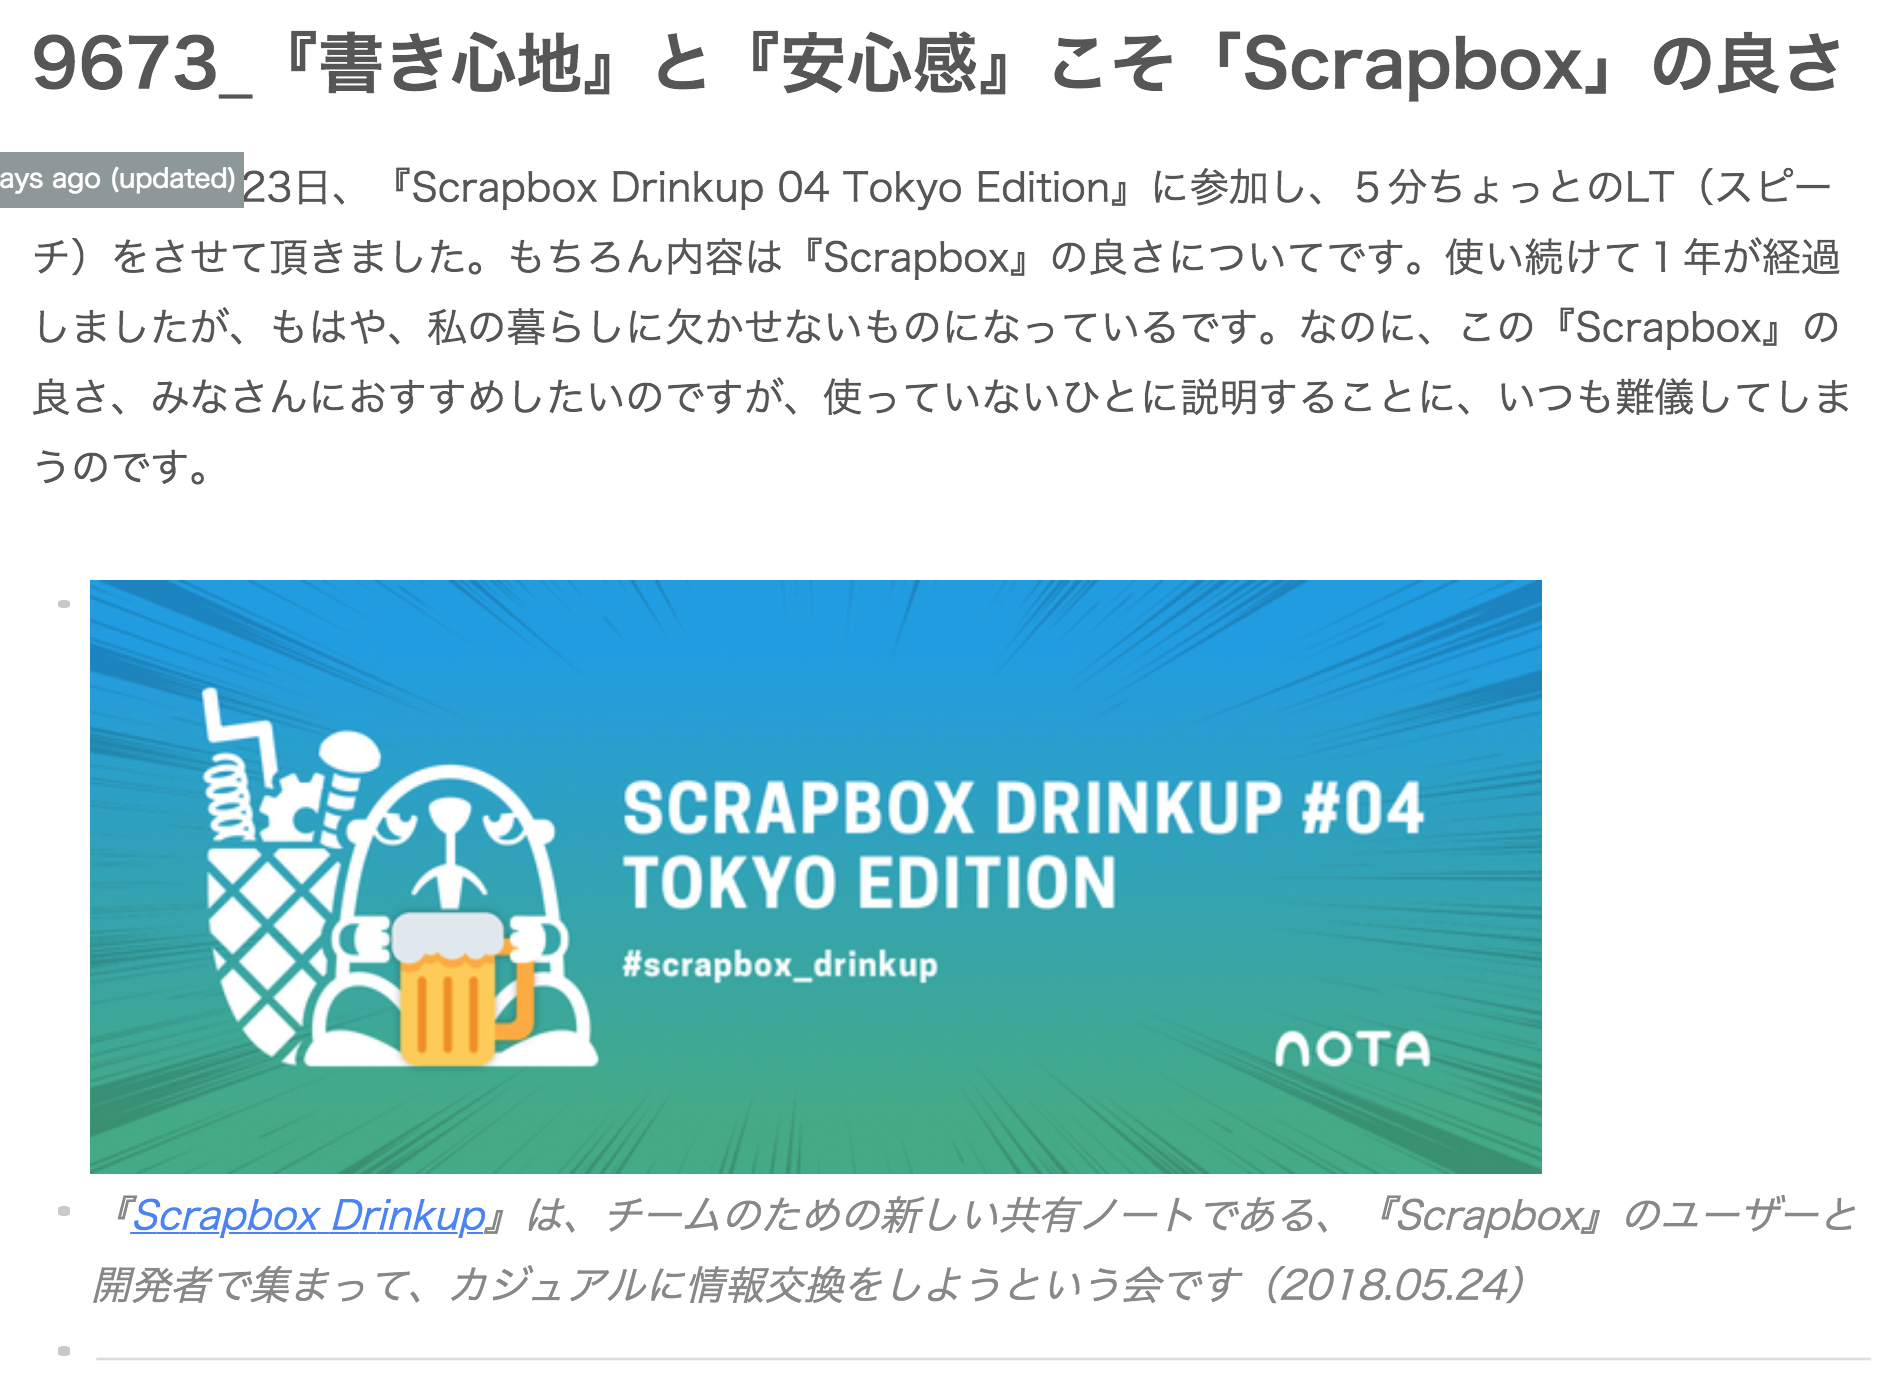 Scrapbox_Drinkup_04_Tokyo_Editionのまとめ